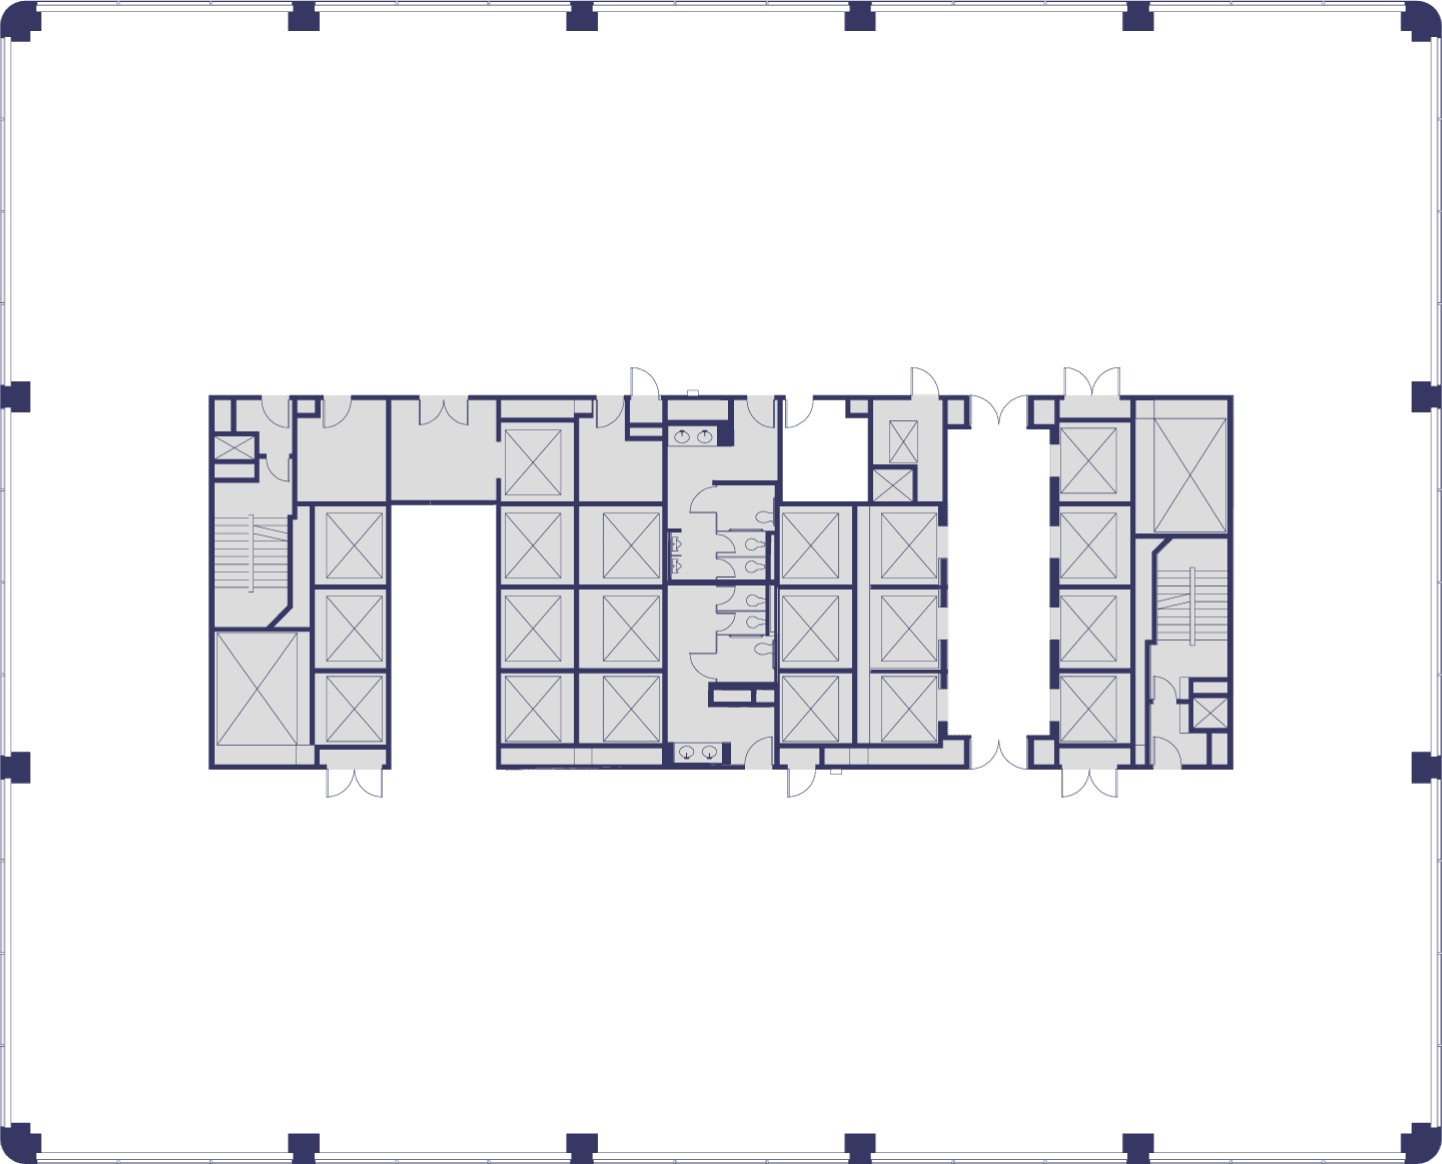 Floor 6 - Base Plan